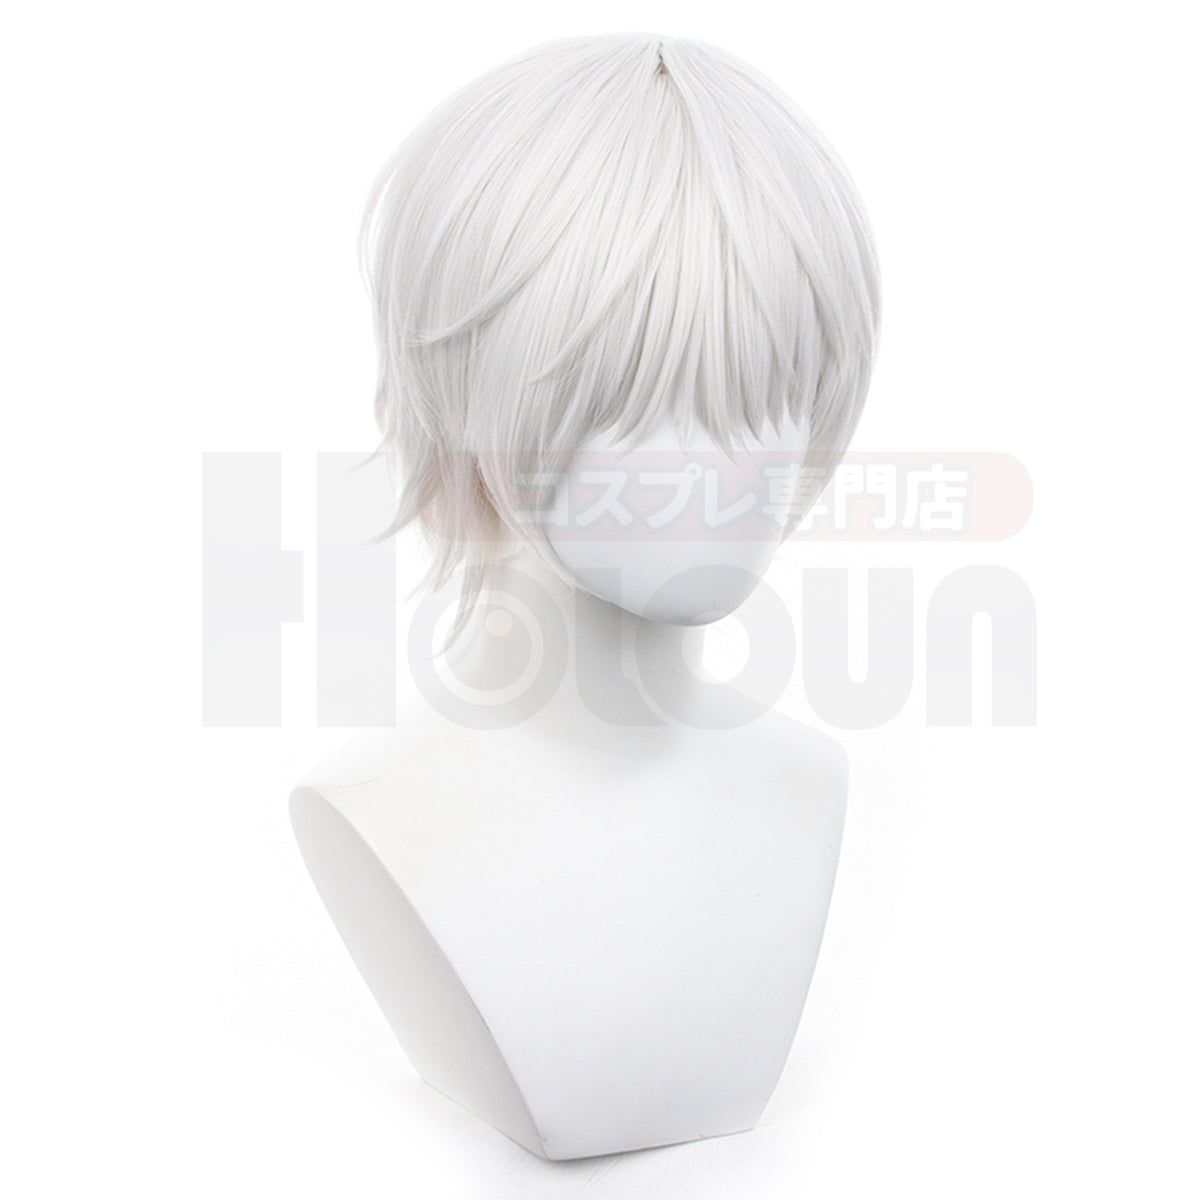 HOLOUN Gokurakugai Anime Yomi Cosplay Wig Rose Net Synthetic Fiber Adjustable Size Heat Resistant Halloween Party